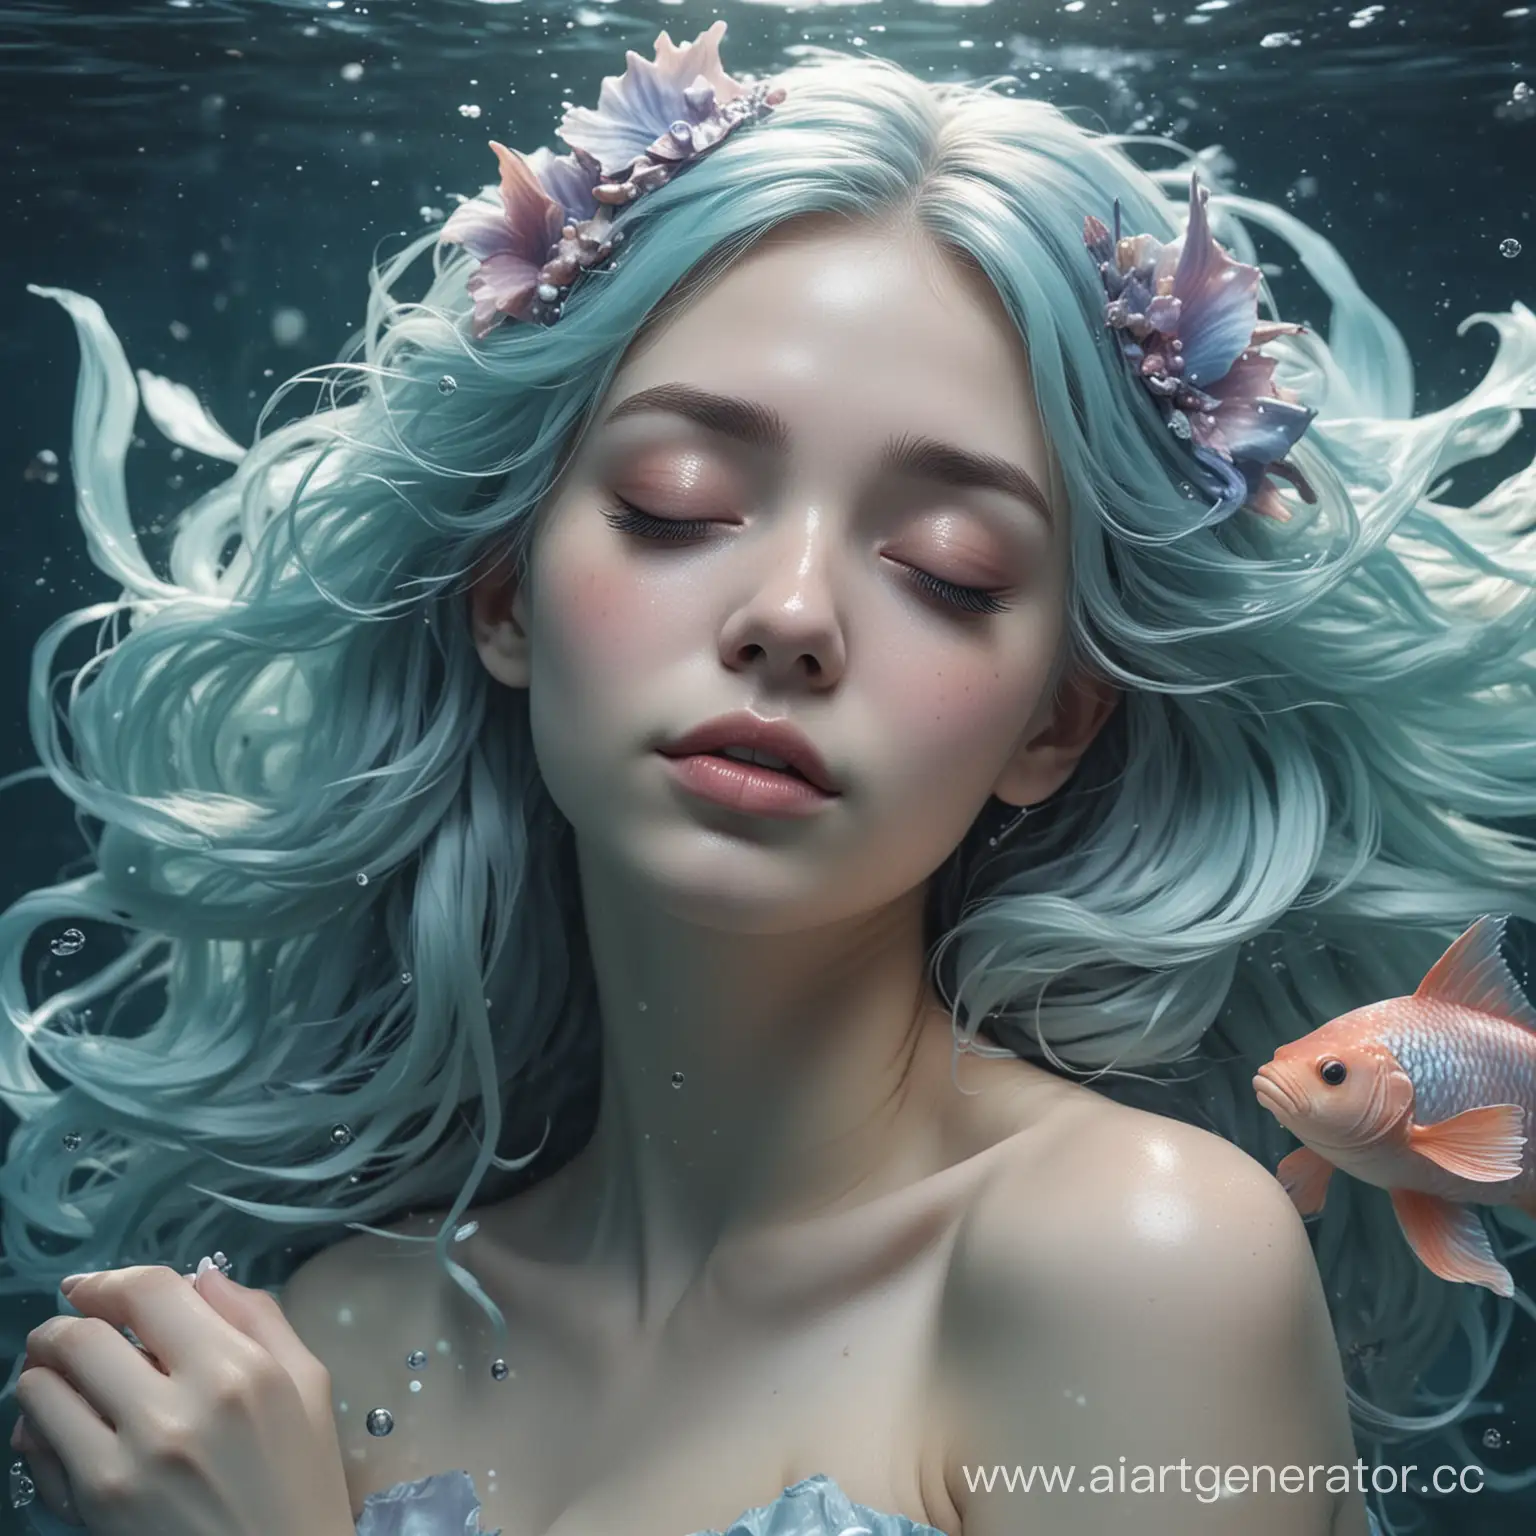 Dreamy-Mermaid-with-Closed-Eyes-in-Cold-Underwater-Scene